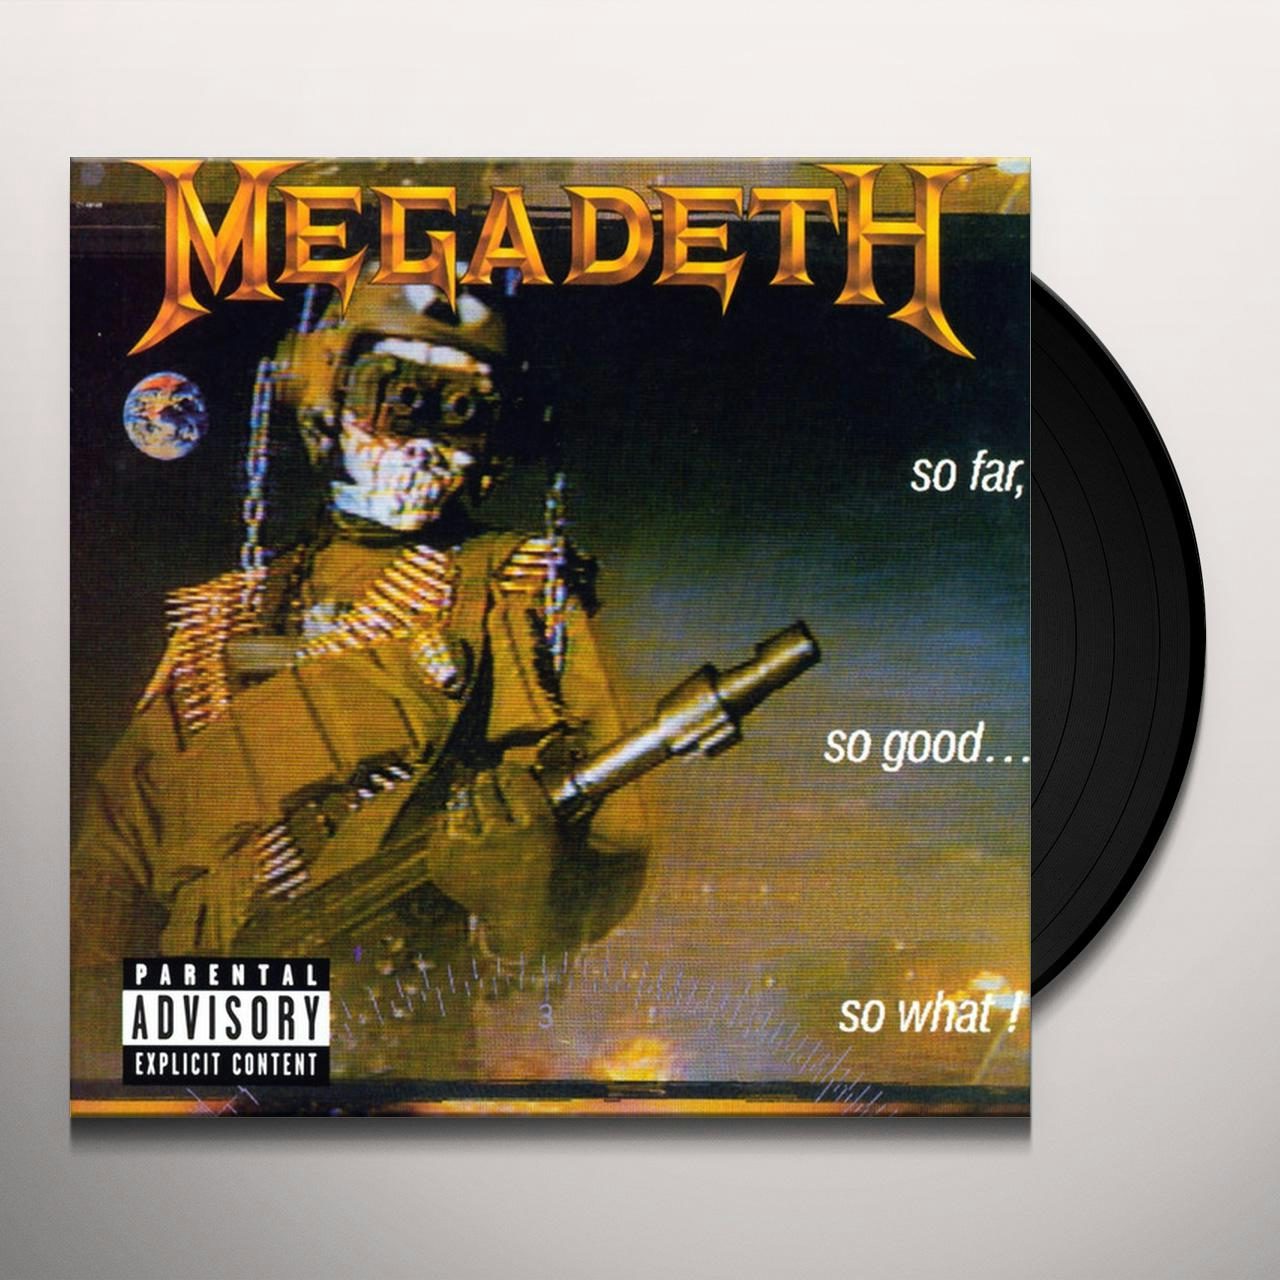 Megadeth SO FAR SO GOOD: SO WHAT Vinyl Record $30.49$27.49